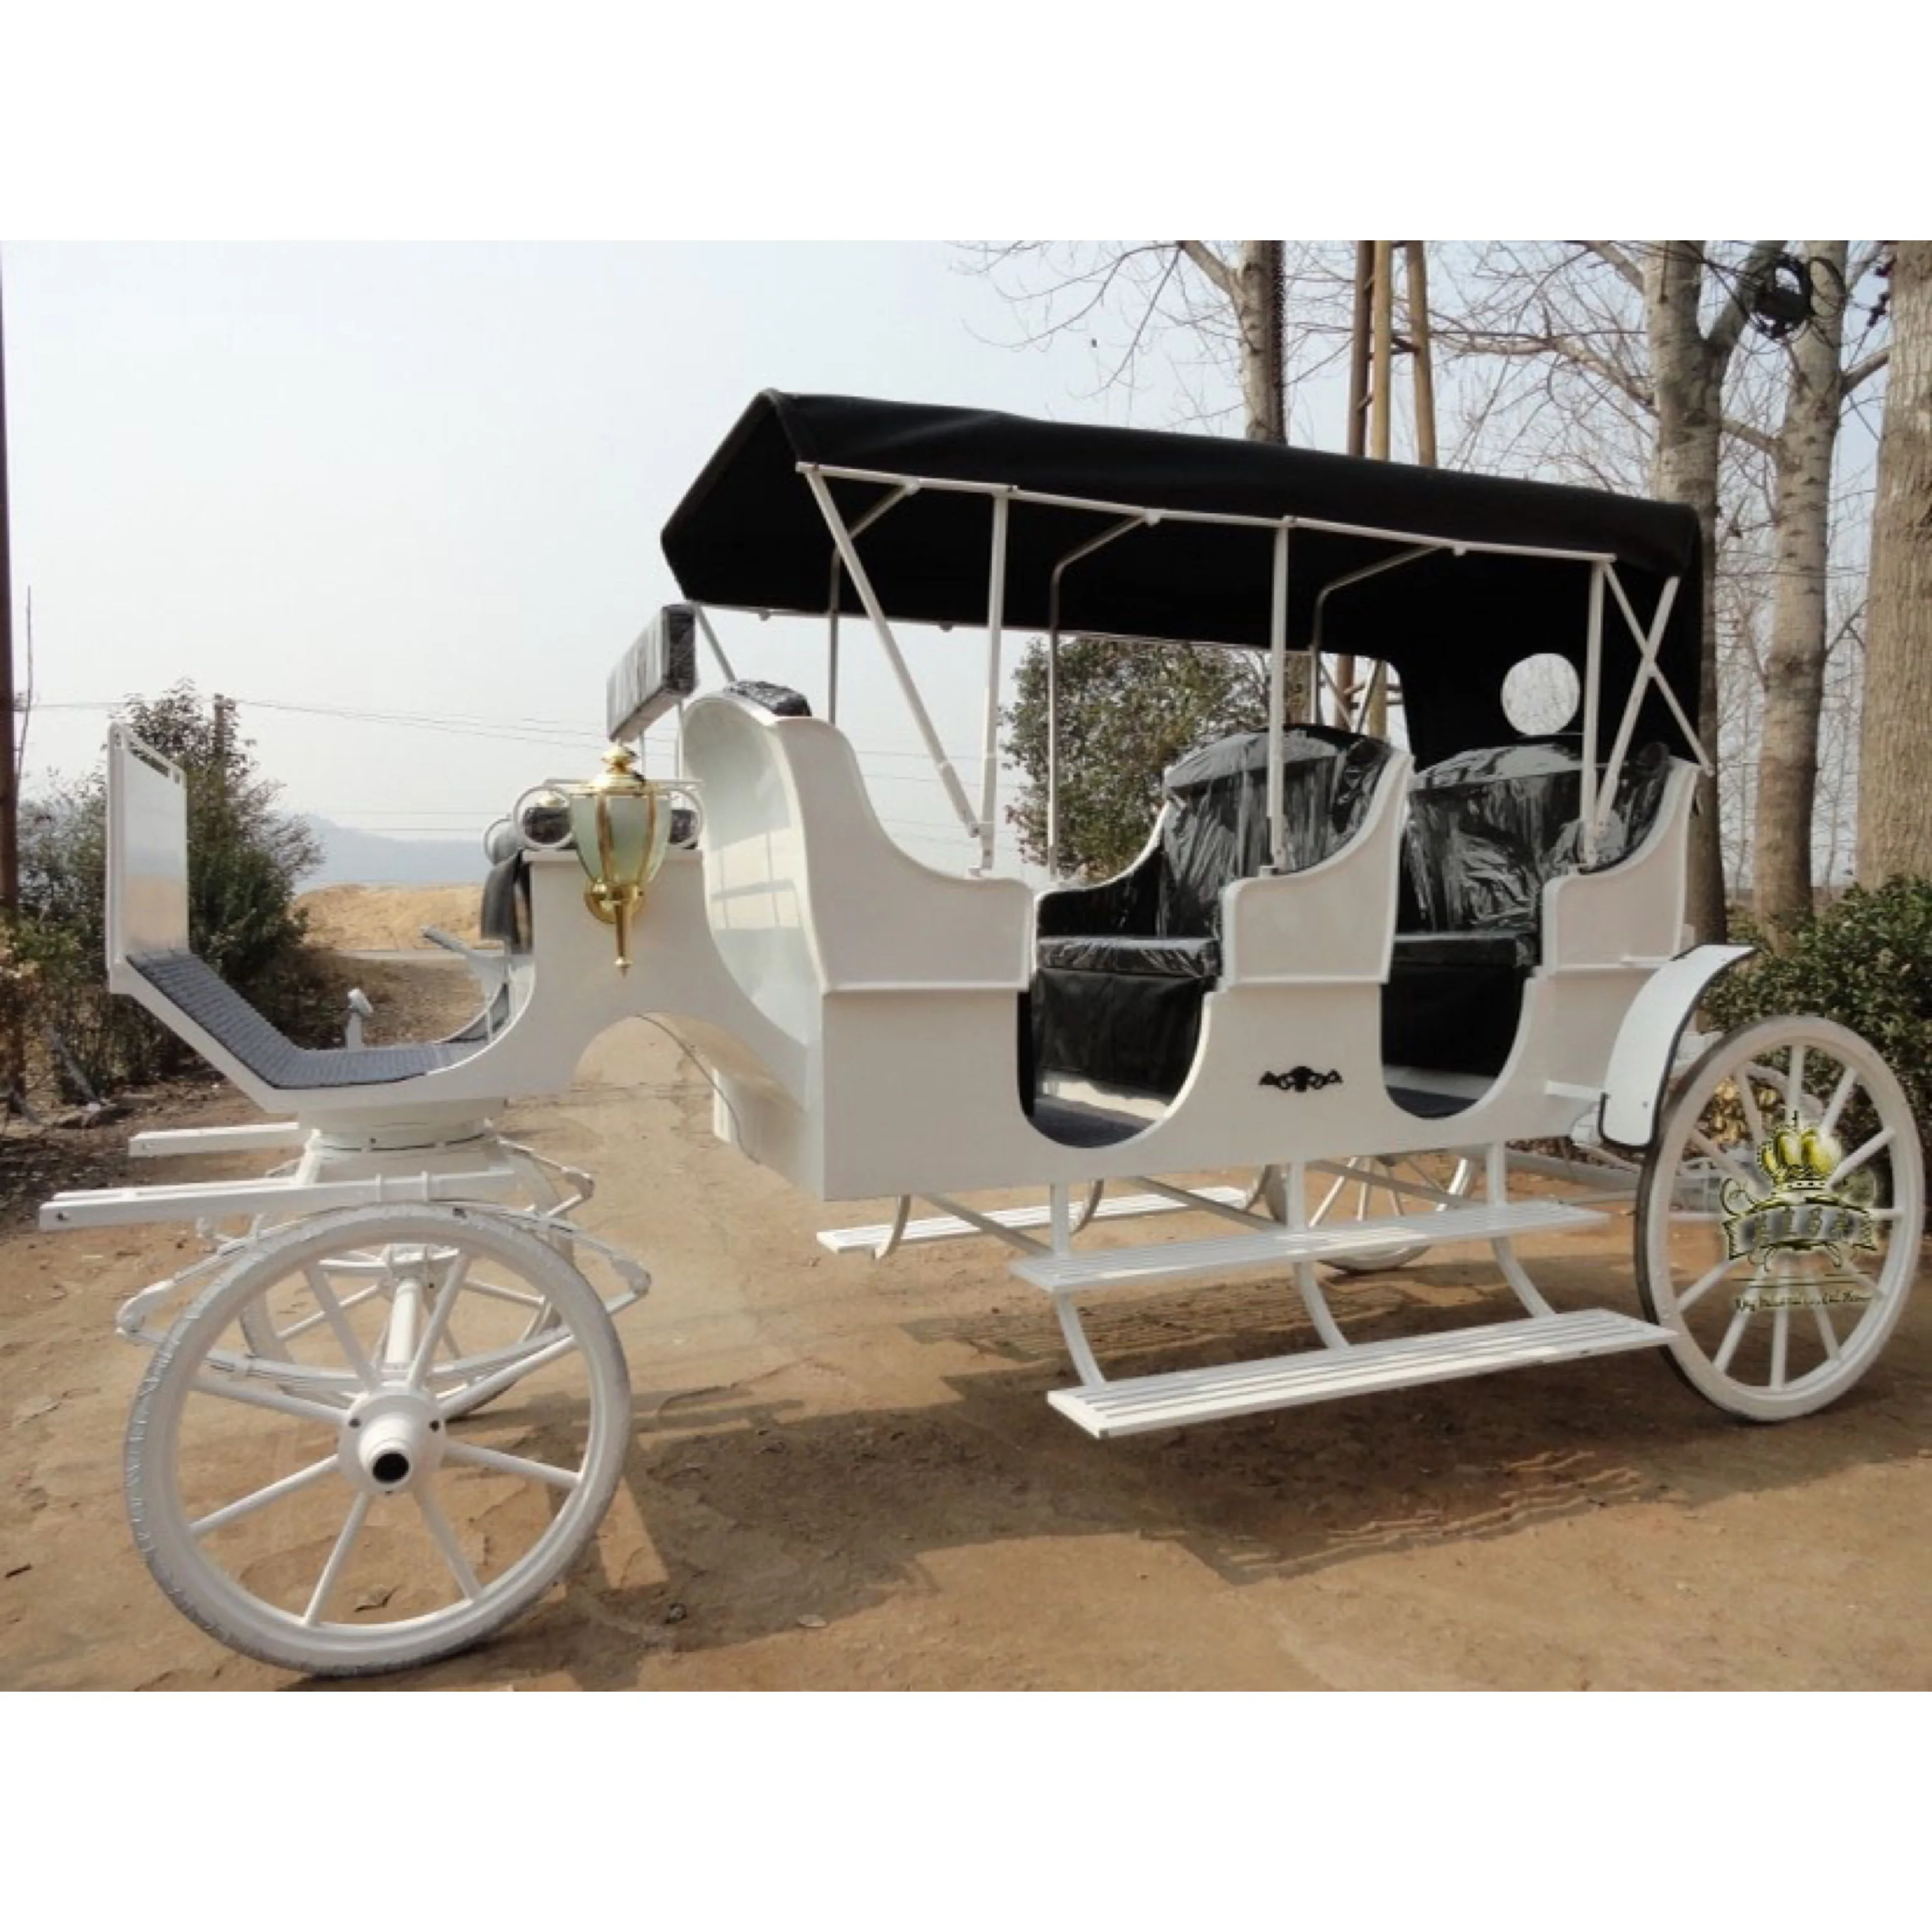 Royal luxury wedding marathon cinderella used horse carriages for sale